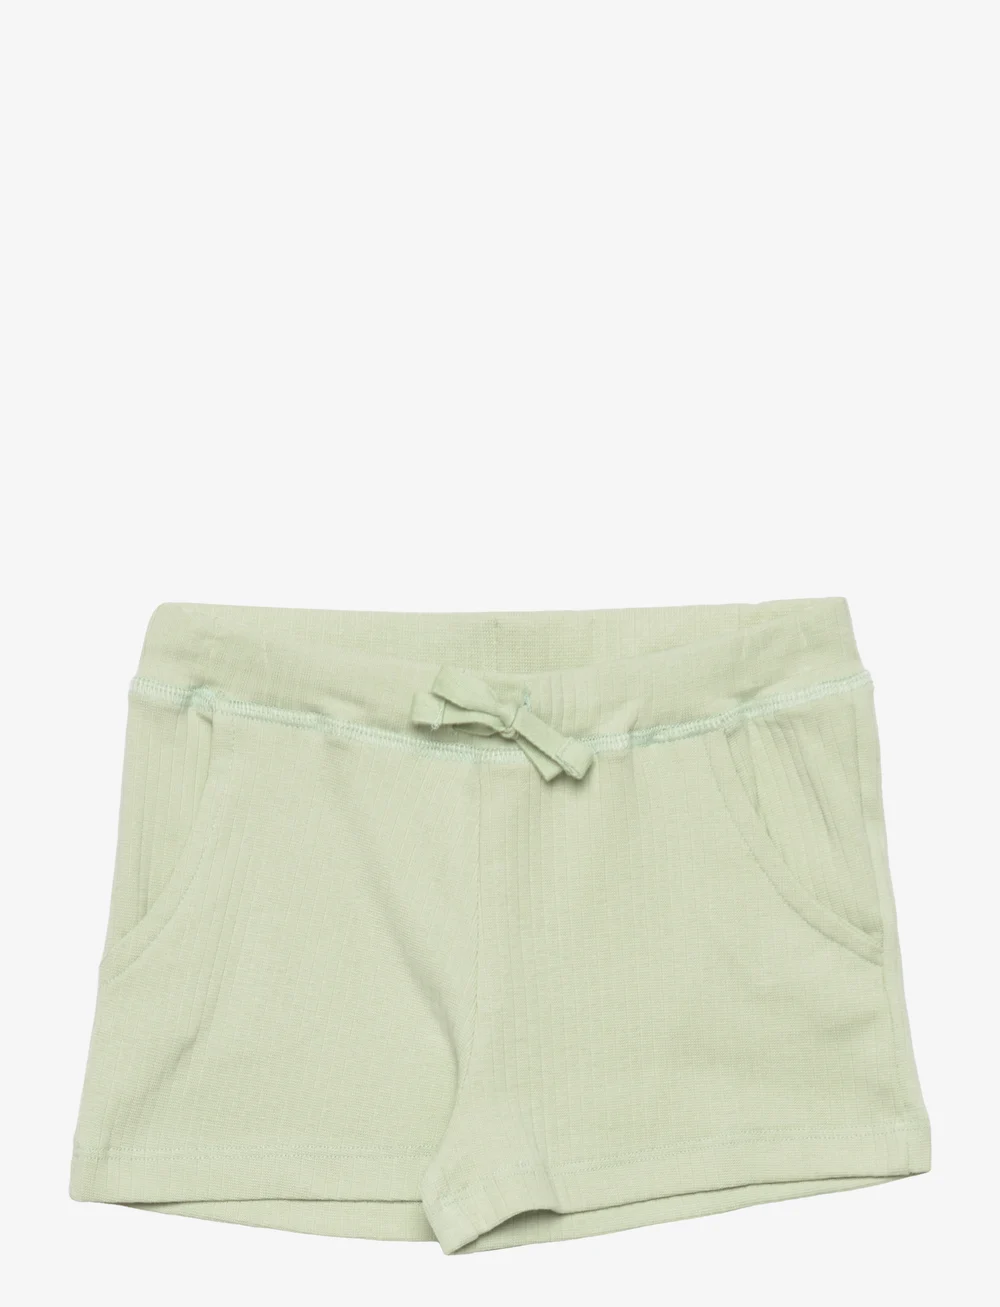 Copenhagen Colors Rib Jersey Shorts - Bottoms 